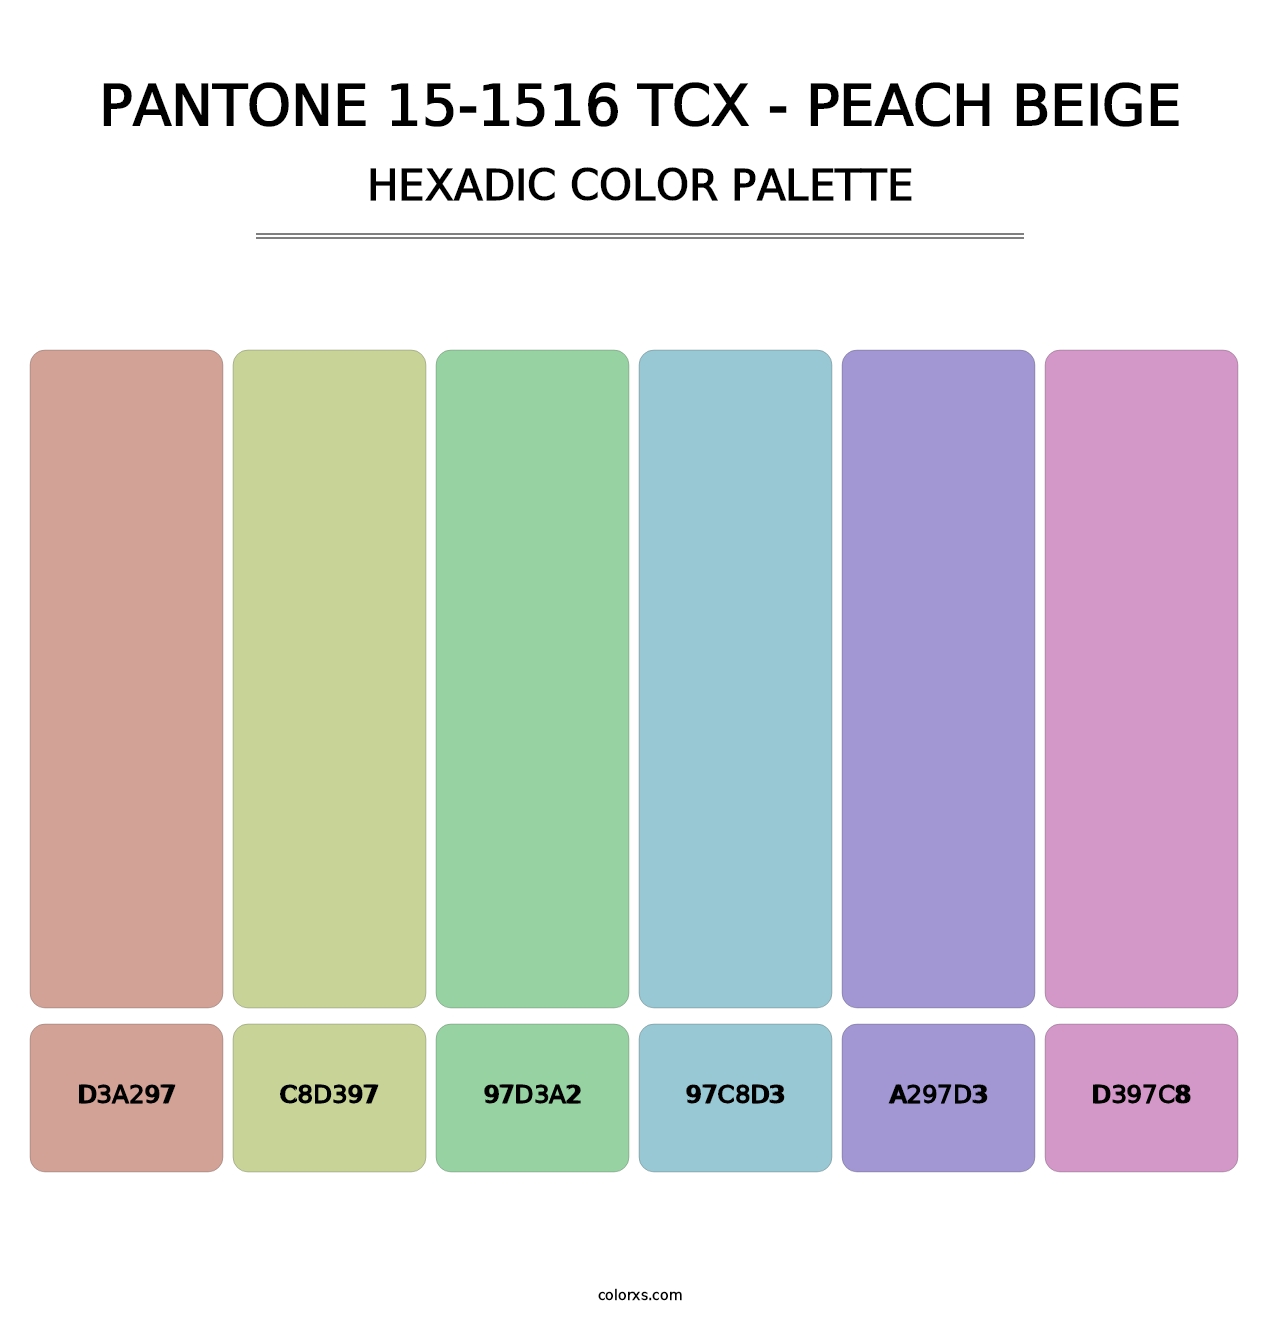 PANTONE 15-1516 TCX - Peach Beige - Hexadic Color Palette